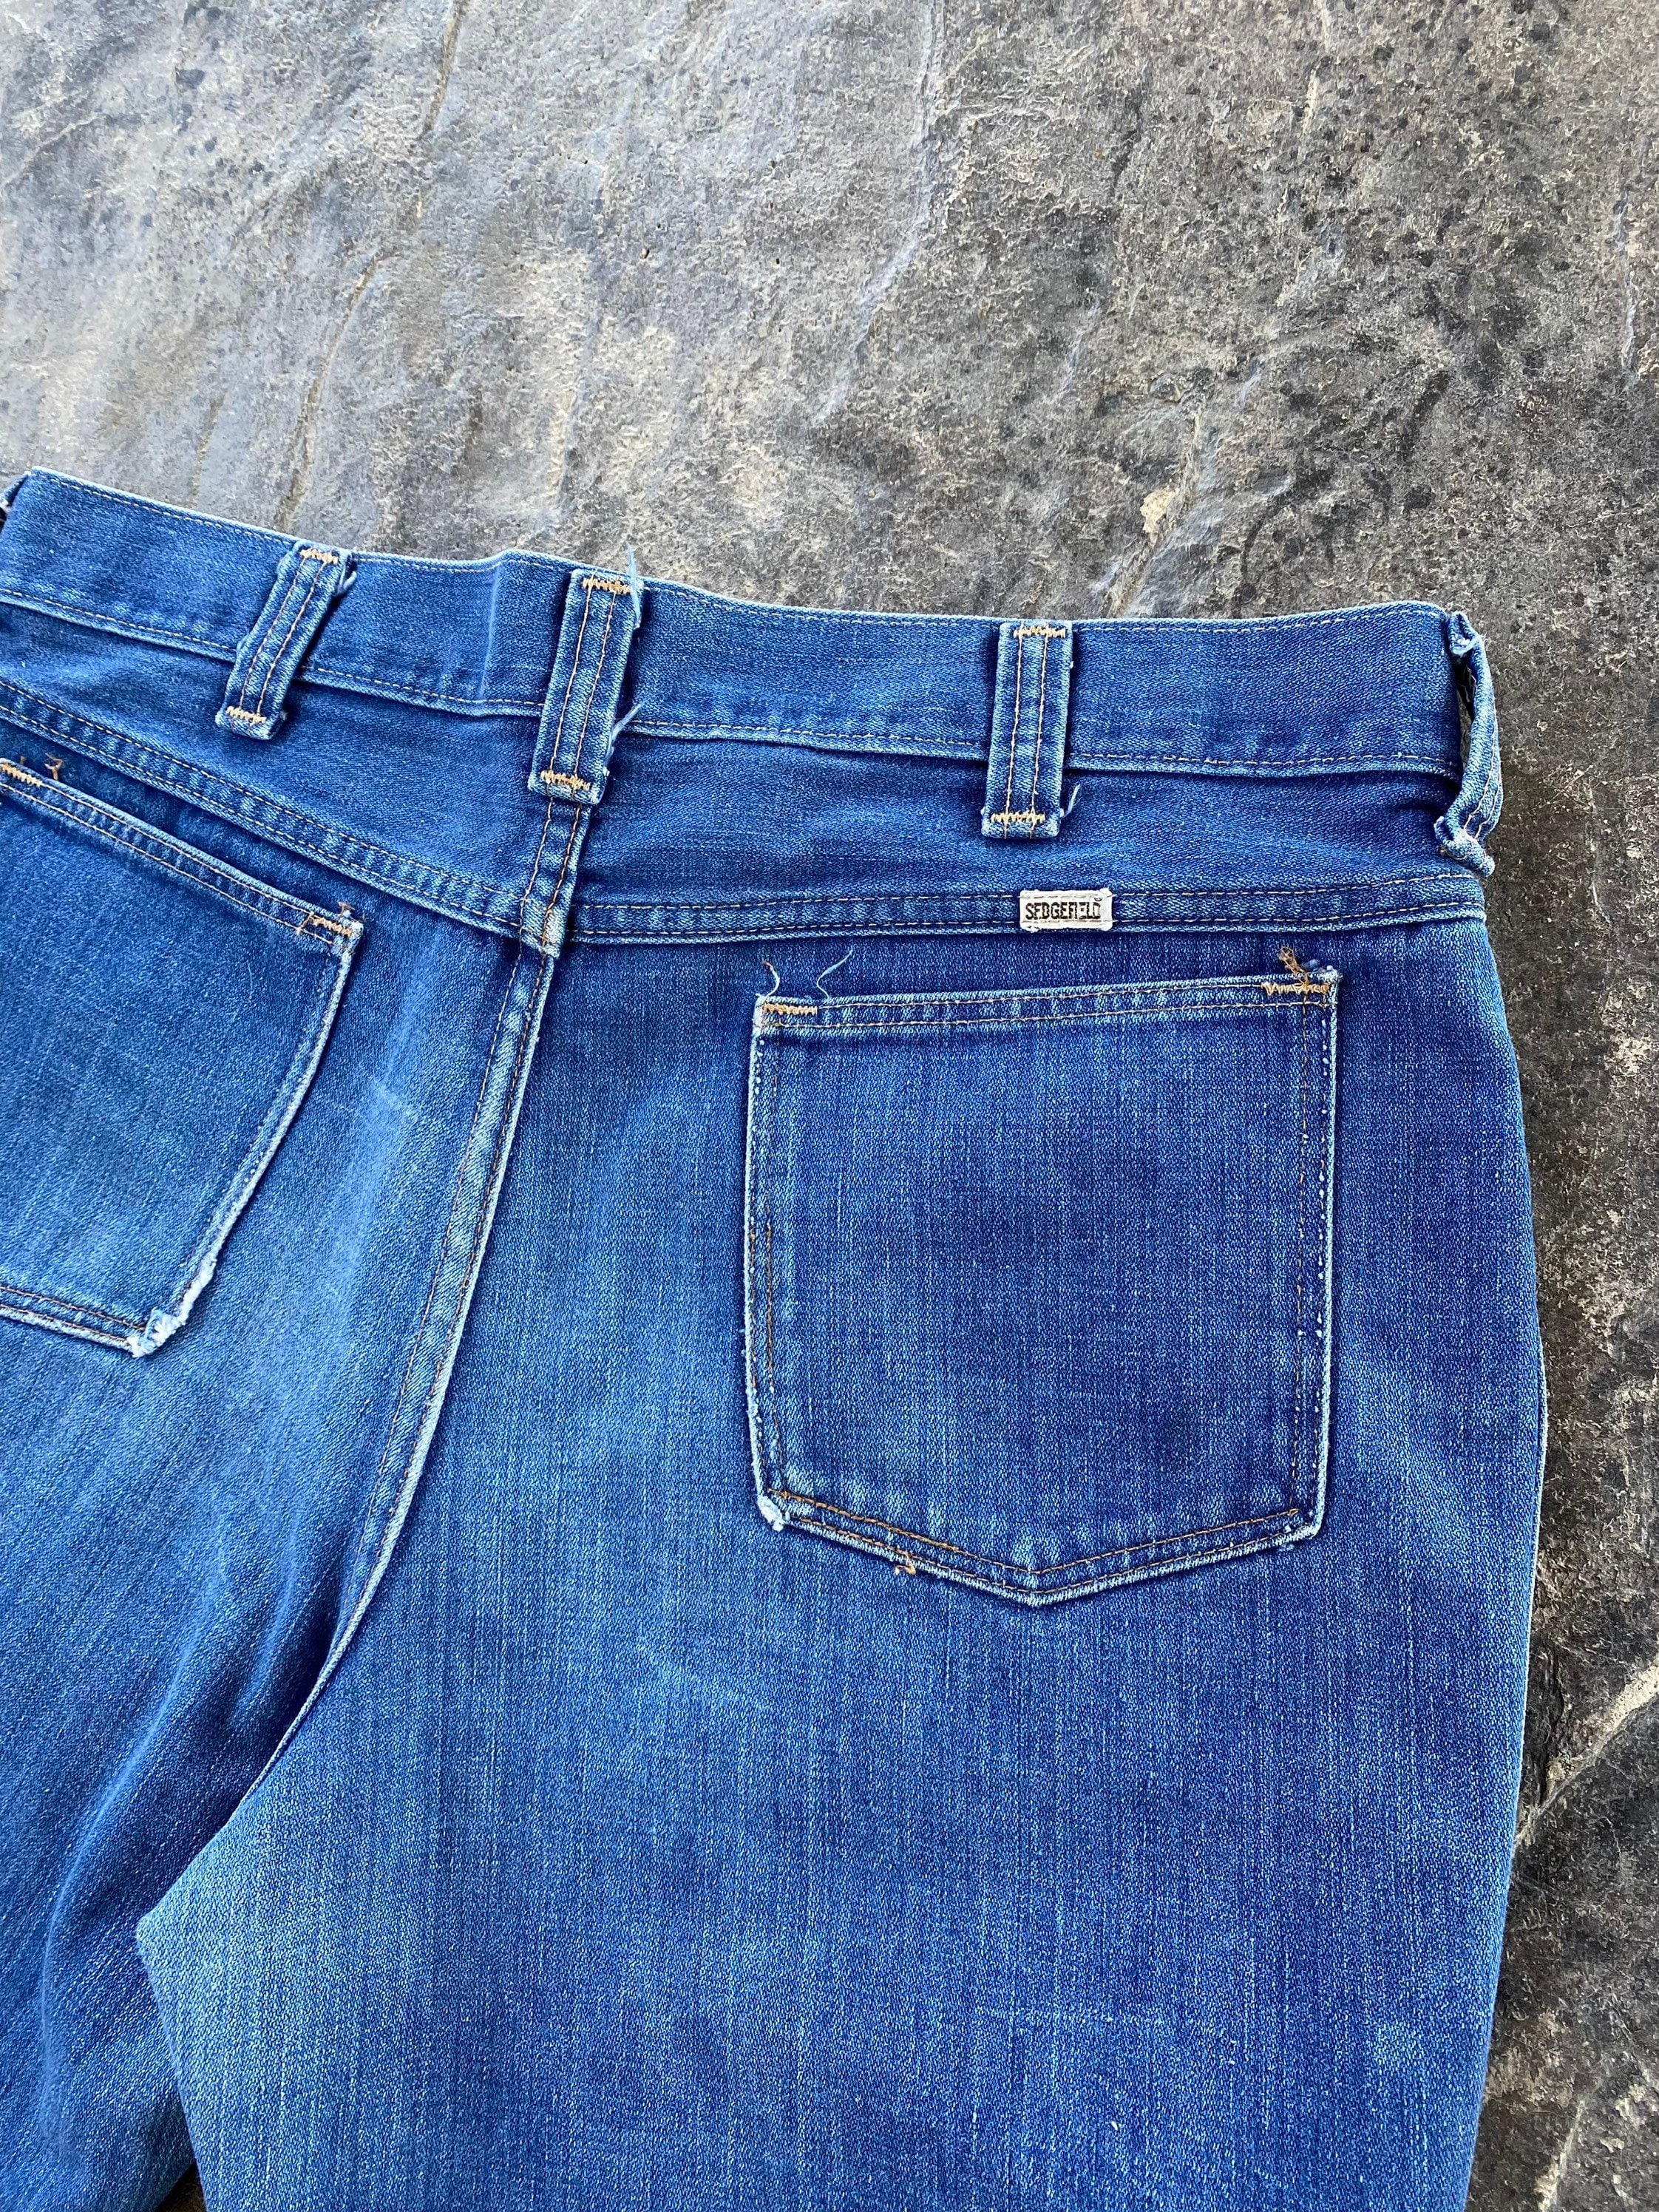 70s High Waist Flared Jeans | Men's Denim Jeans | Rad by Radgang